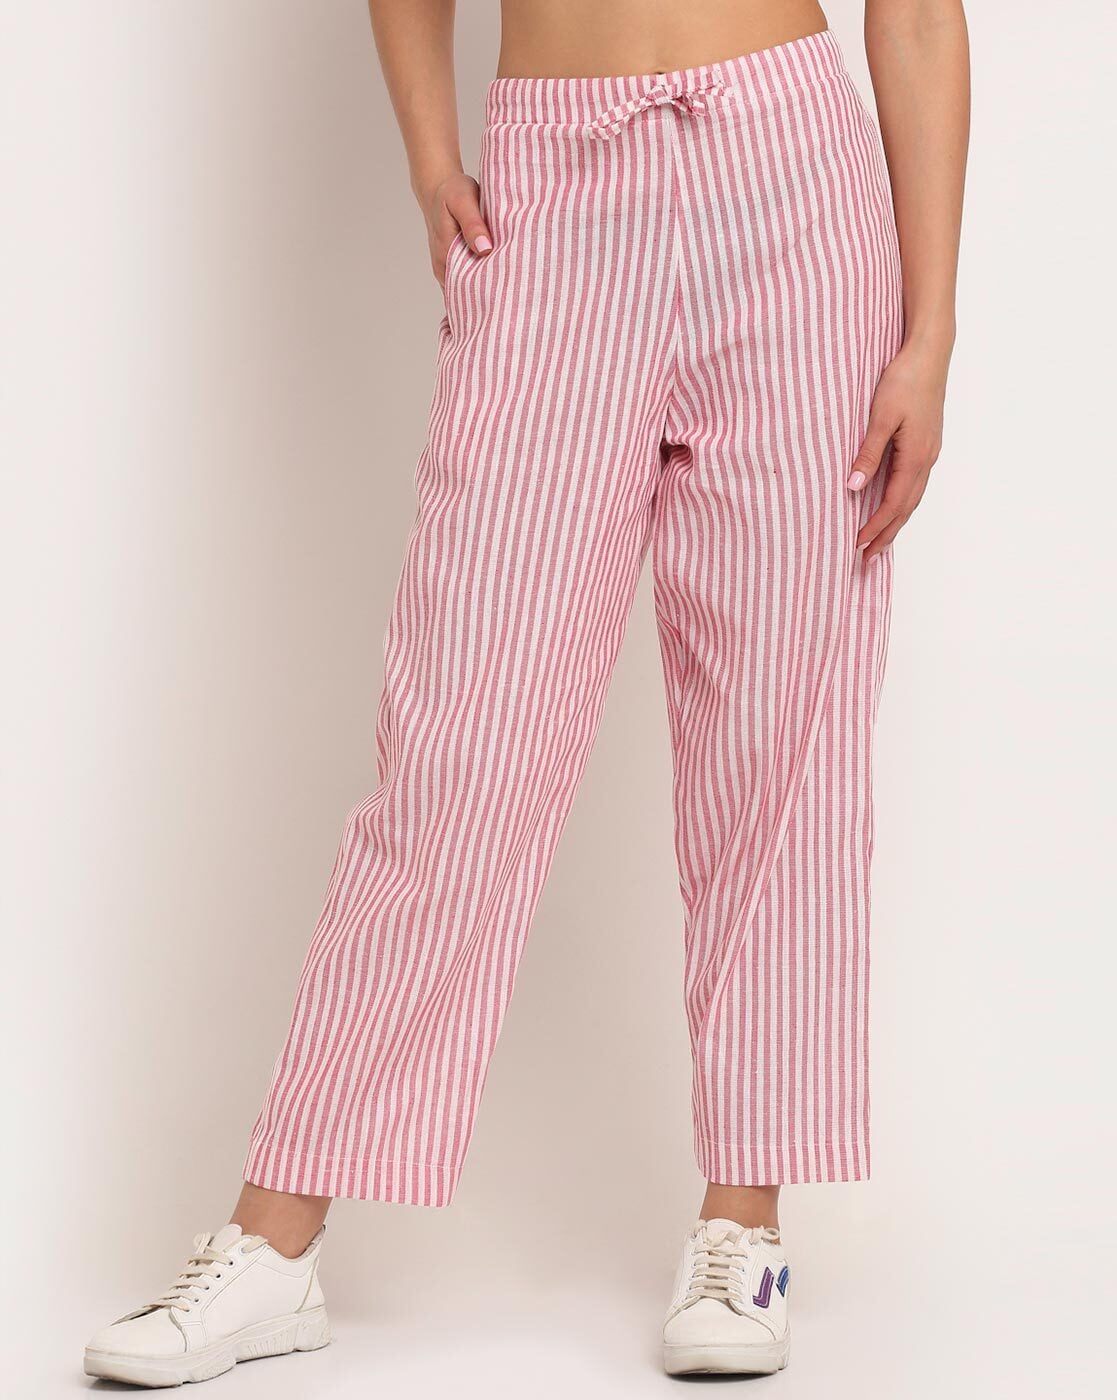 Striped Ladies Yarn Dyed Strip 34th Length Pants